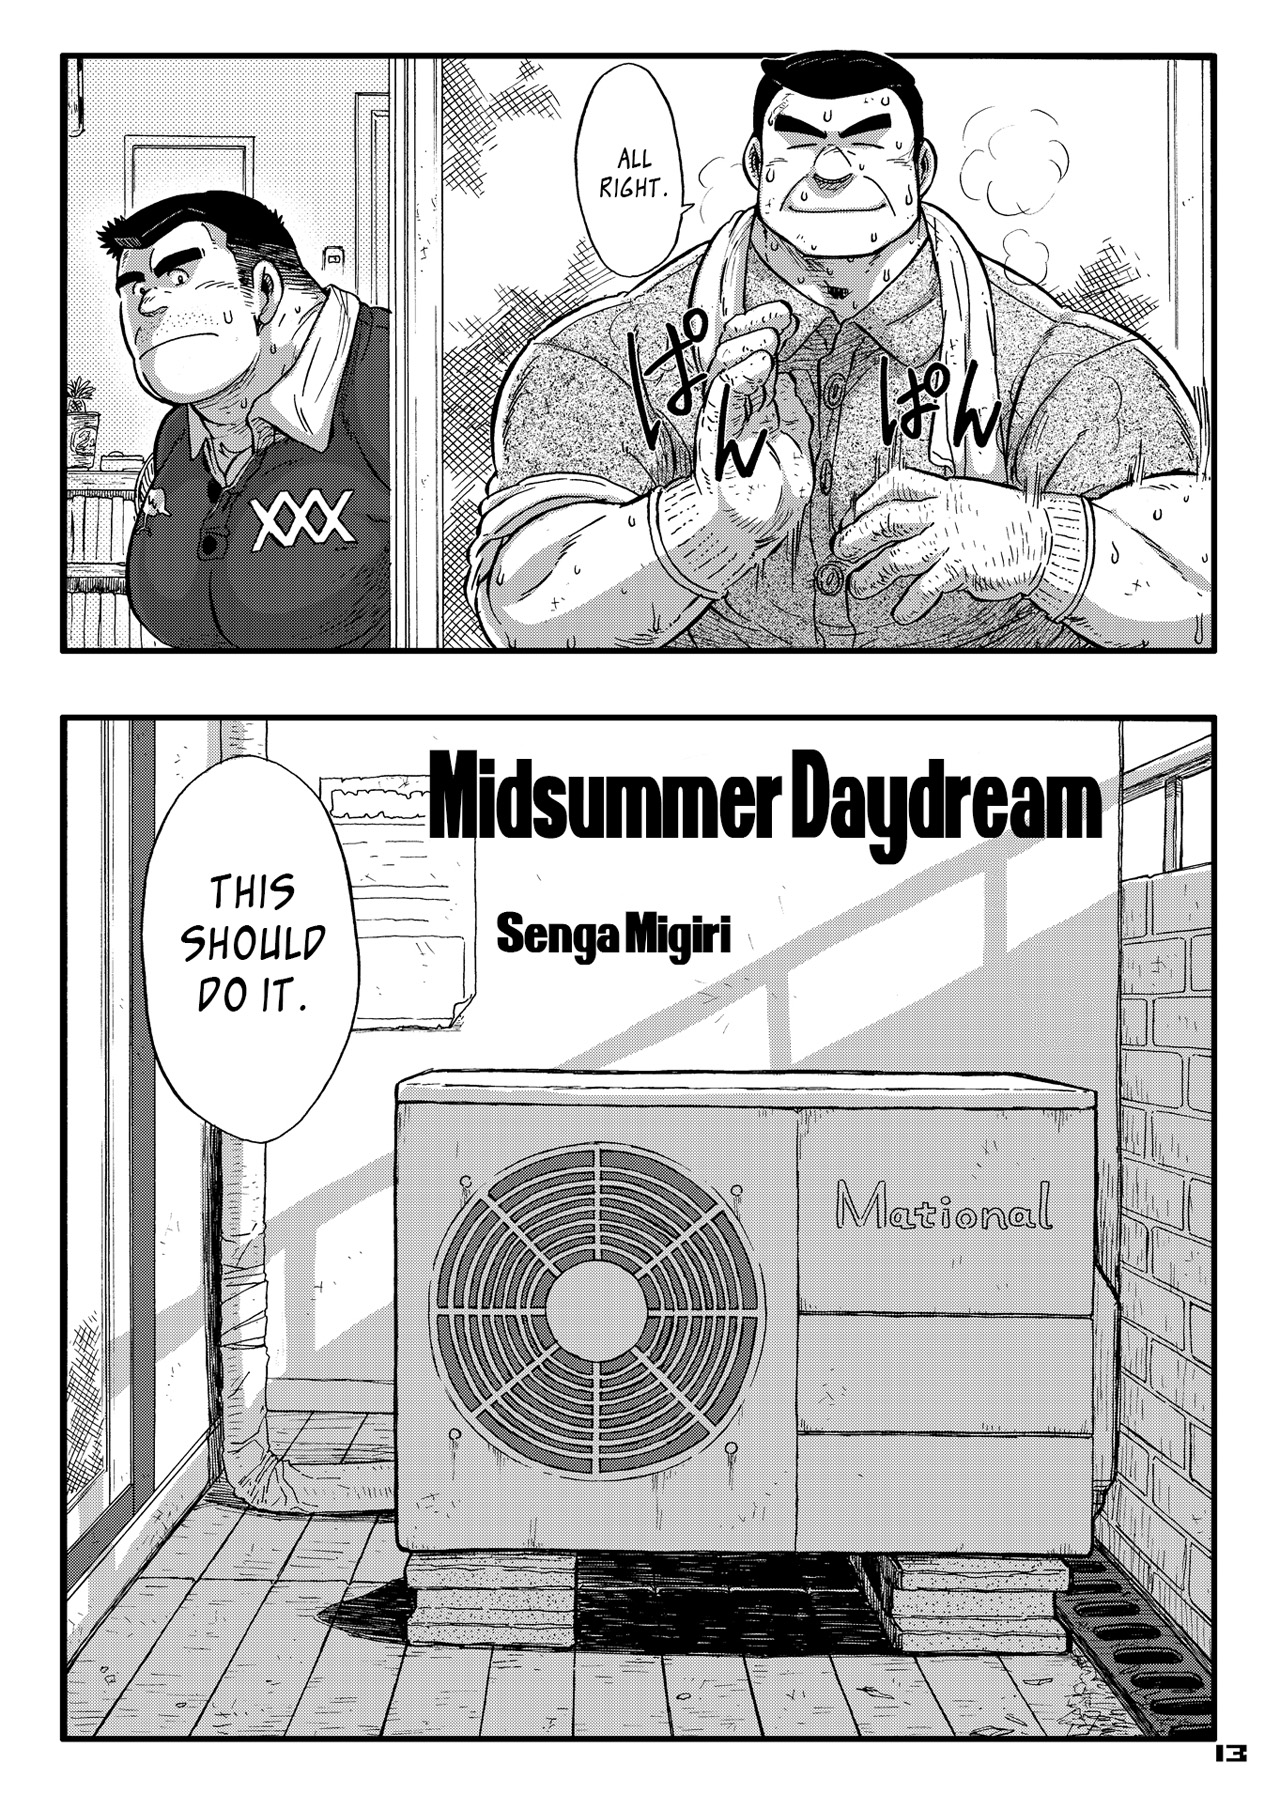 Senga Migiri 旋牙闇霧 Underground Campaign UGCP Midsummer Daydream